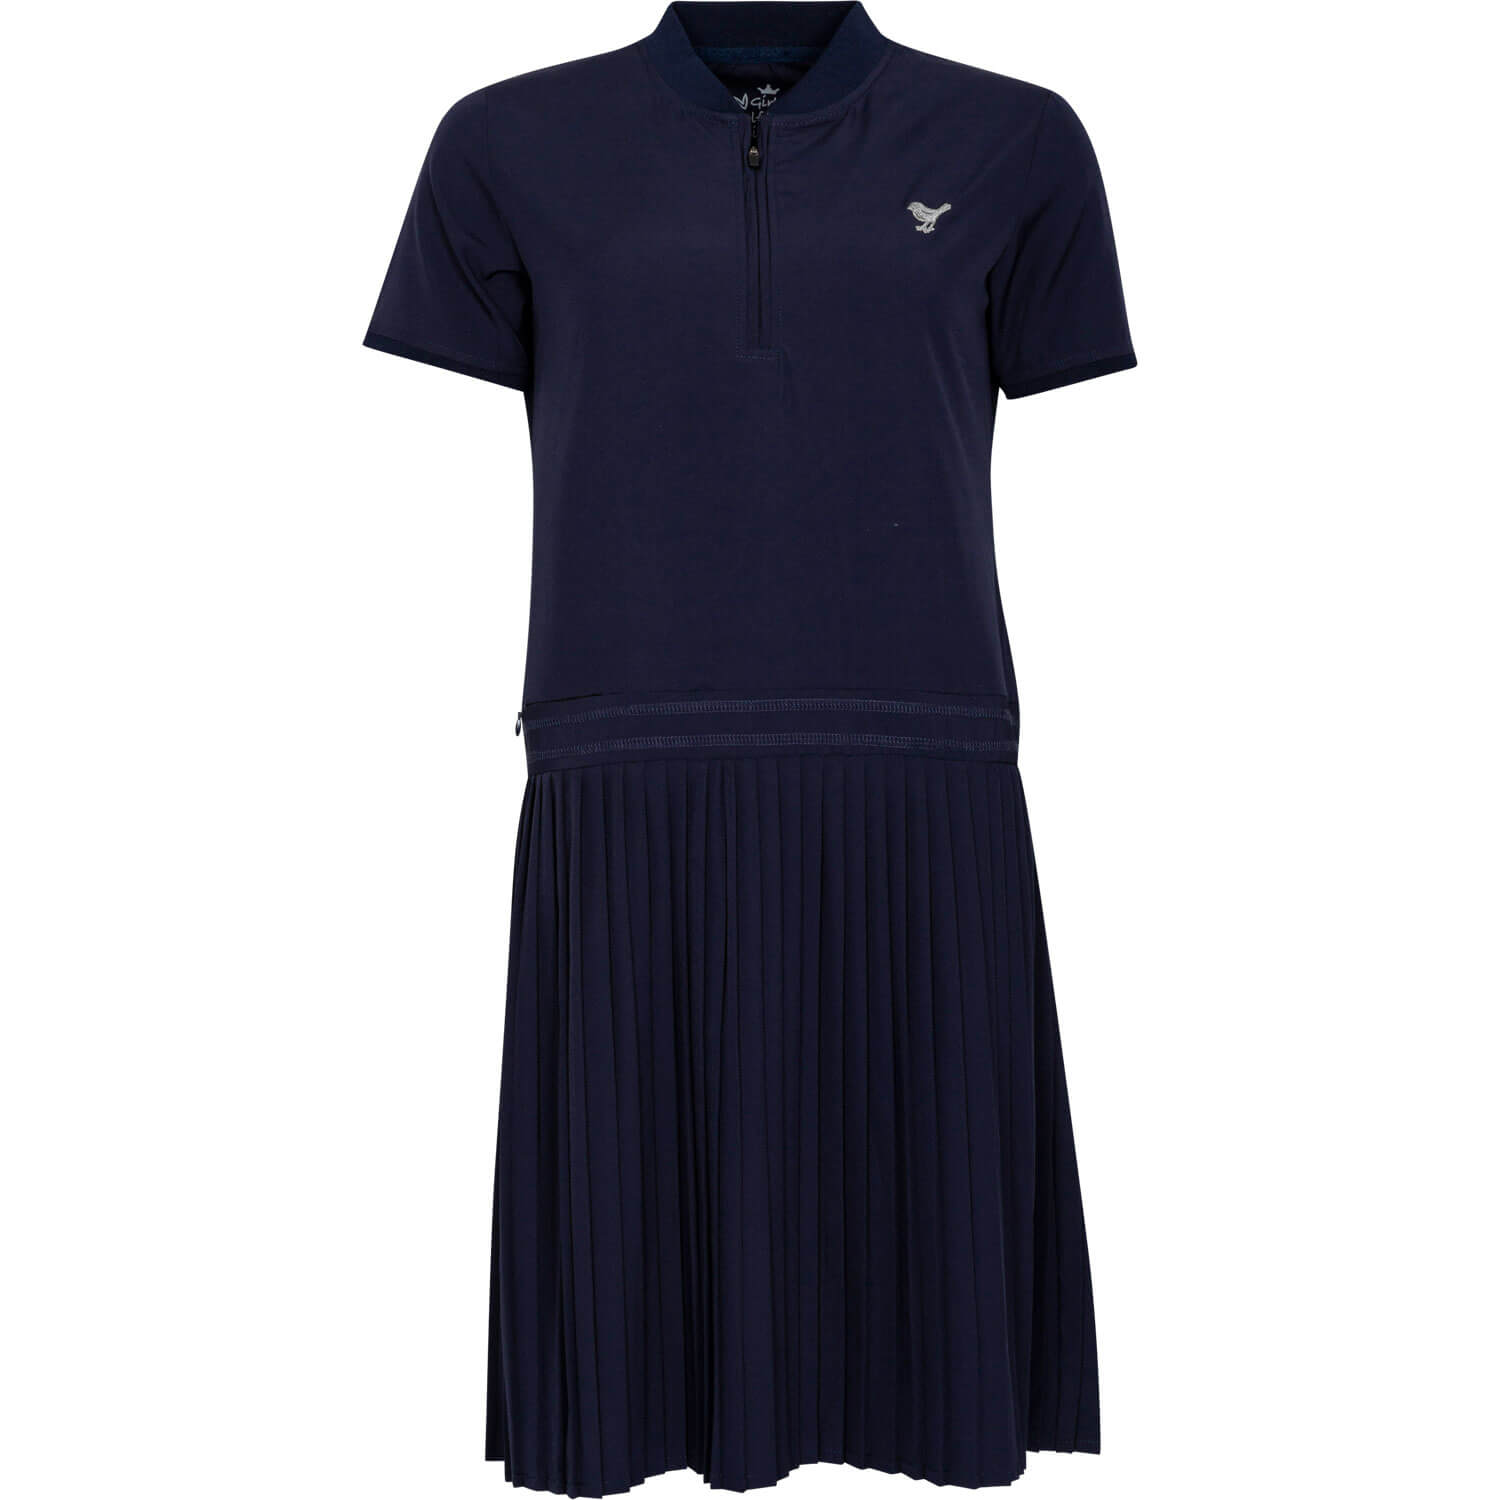 Girls Golf Polo Dress Navy